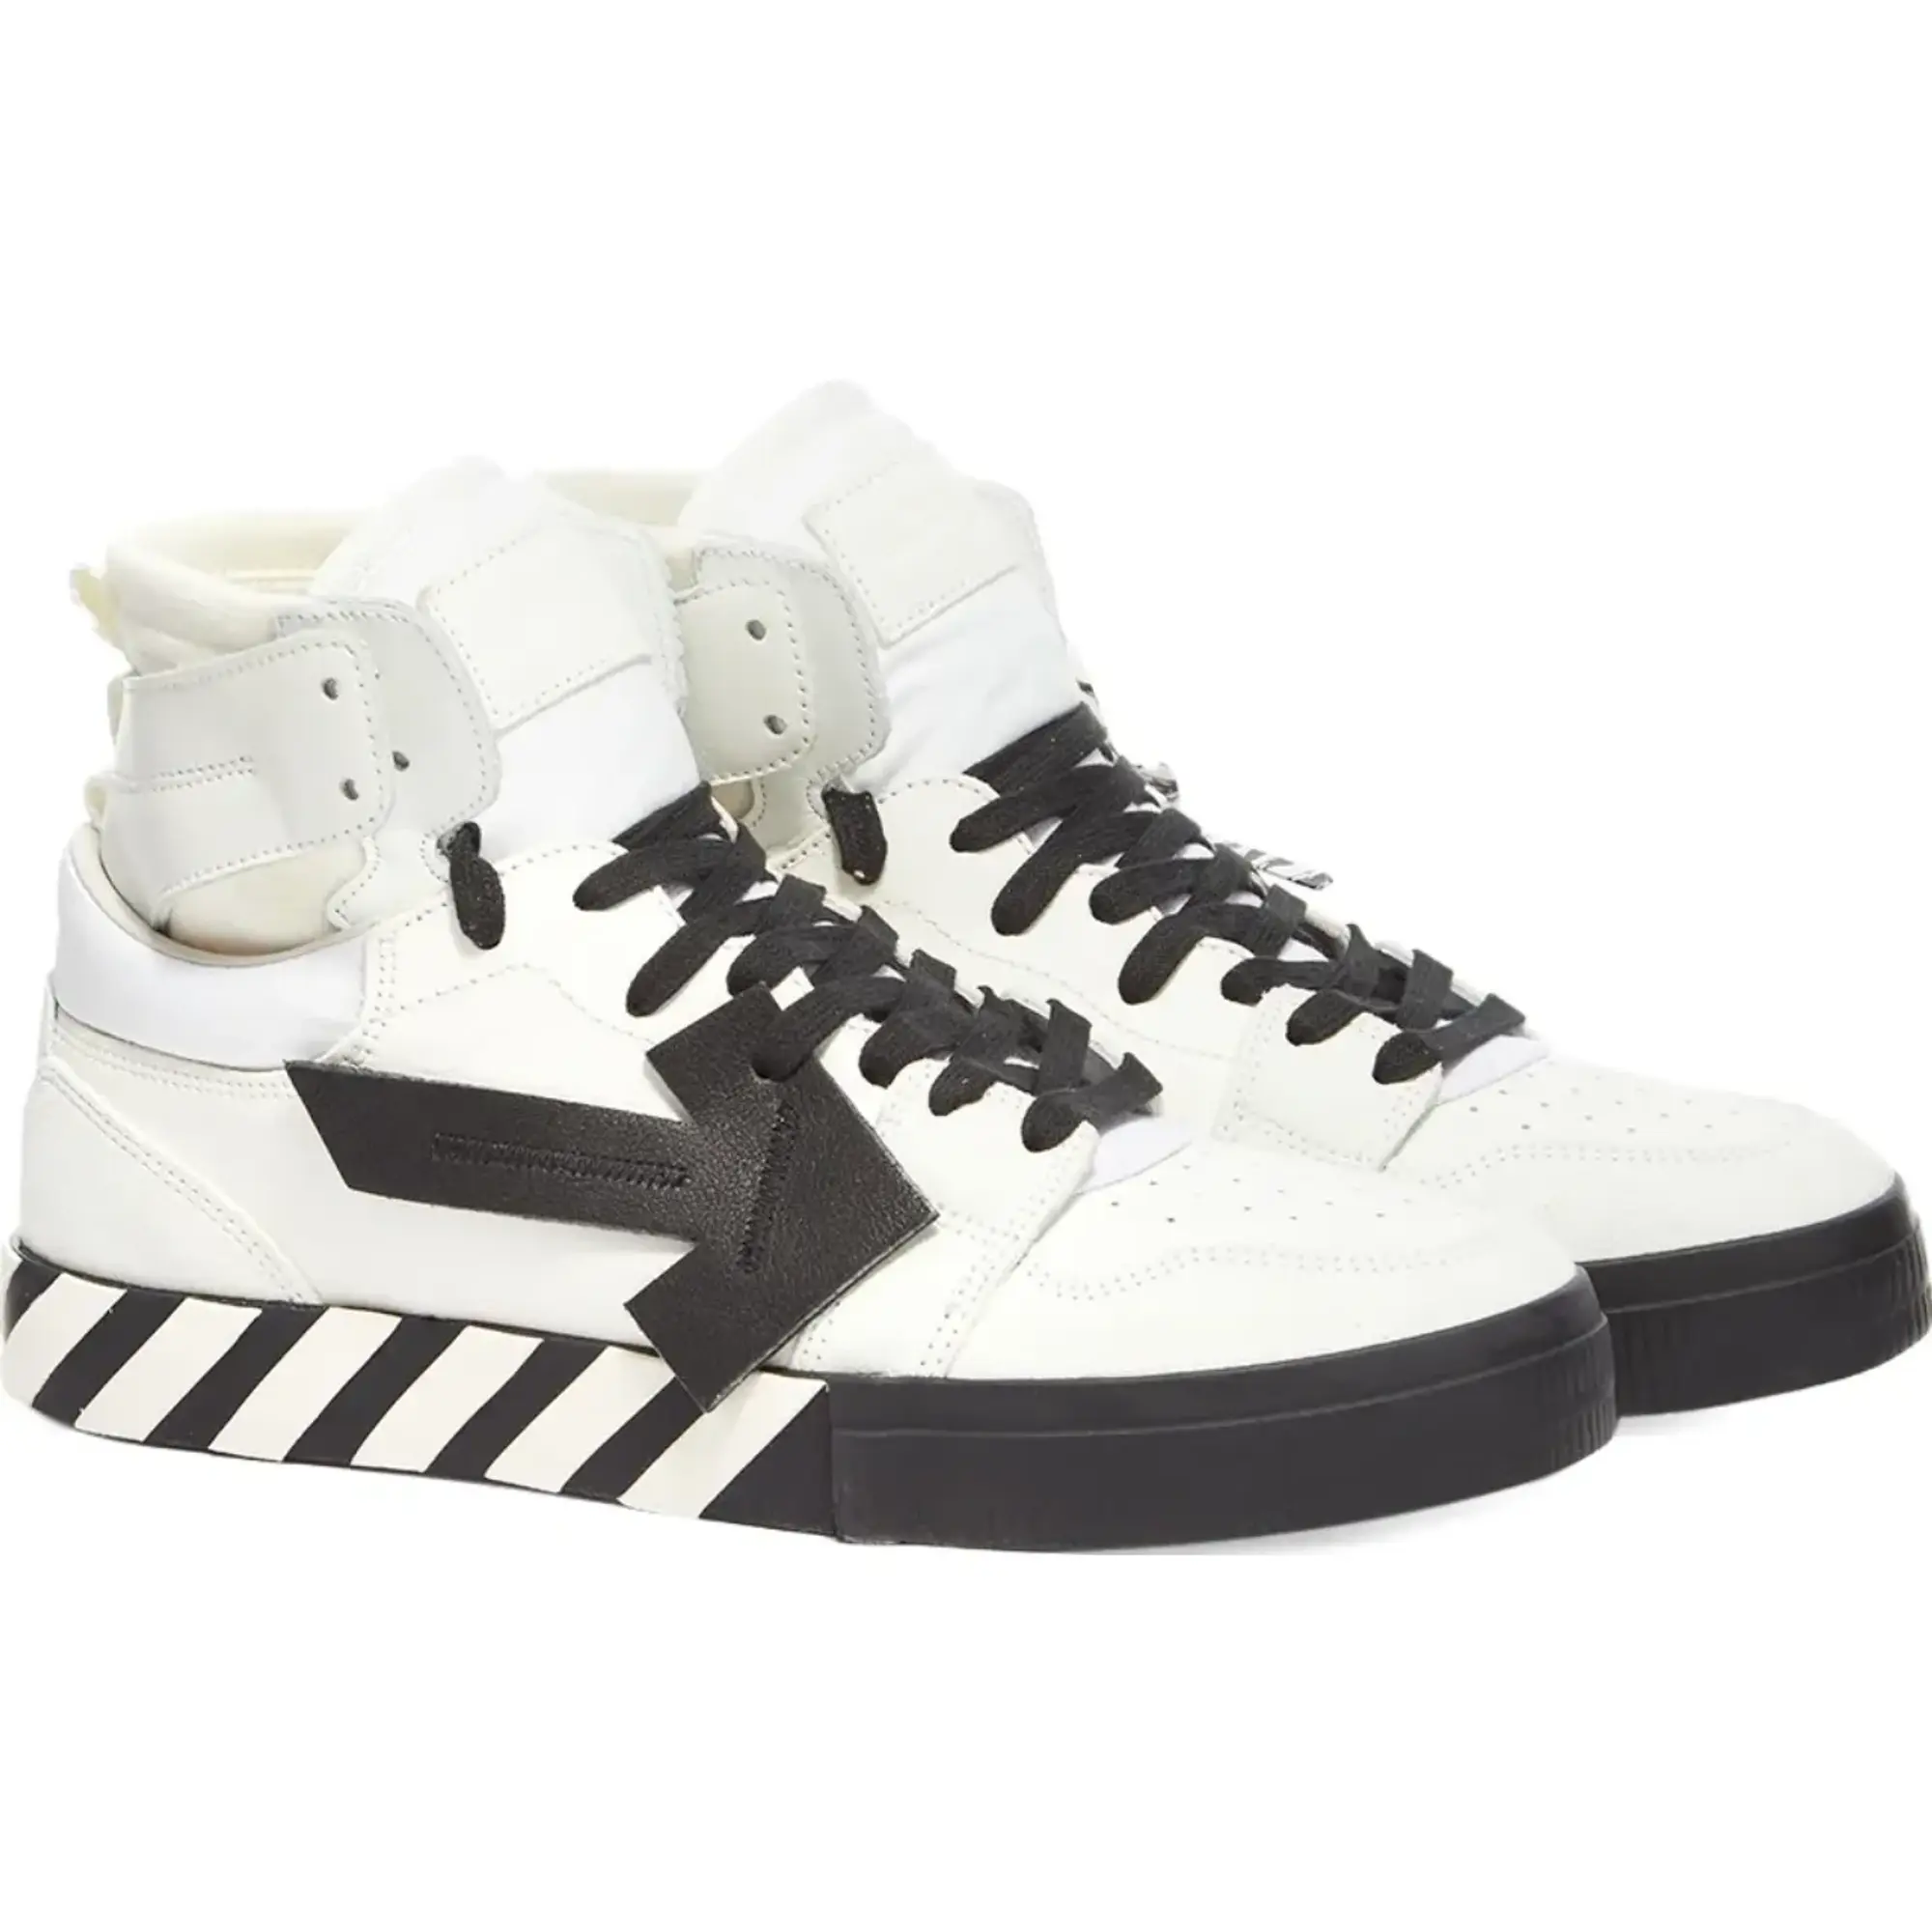 Off-White High Top Vulcanized Leather Sneaker White/Black 